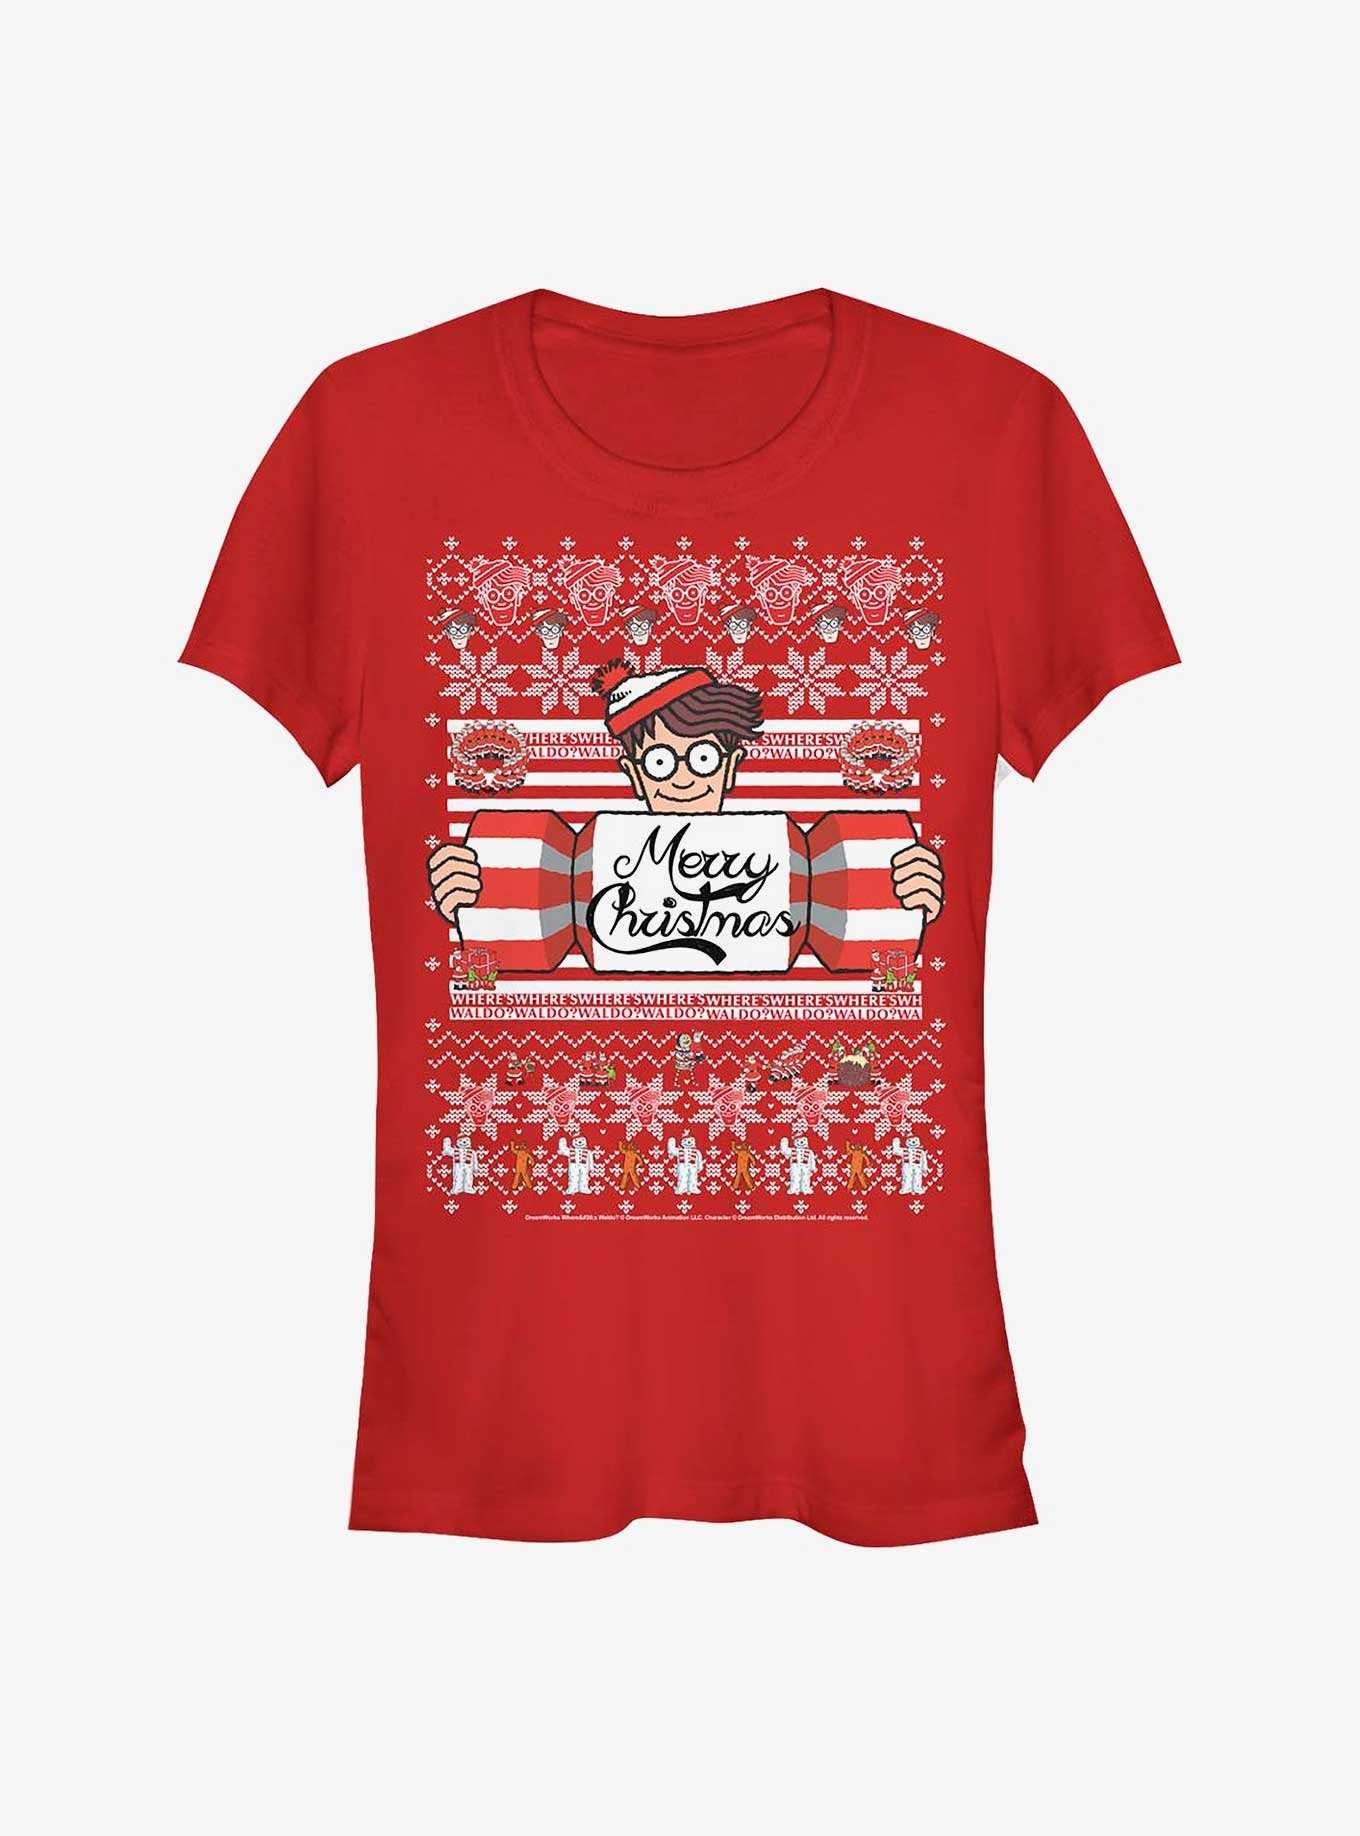 Where's Waldo? Ugly Holiday Girls T-Shirt, , hi-res